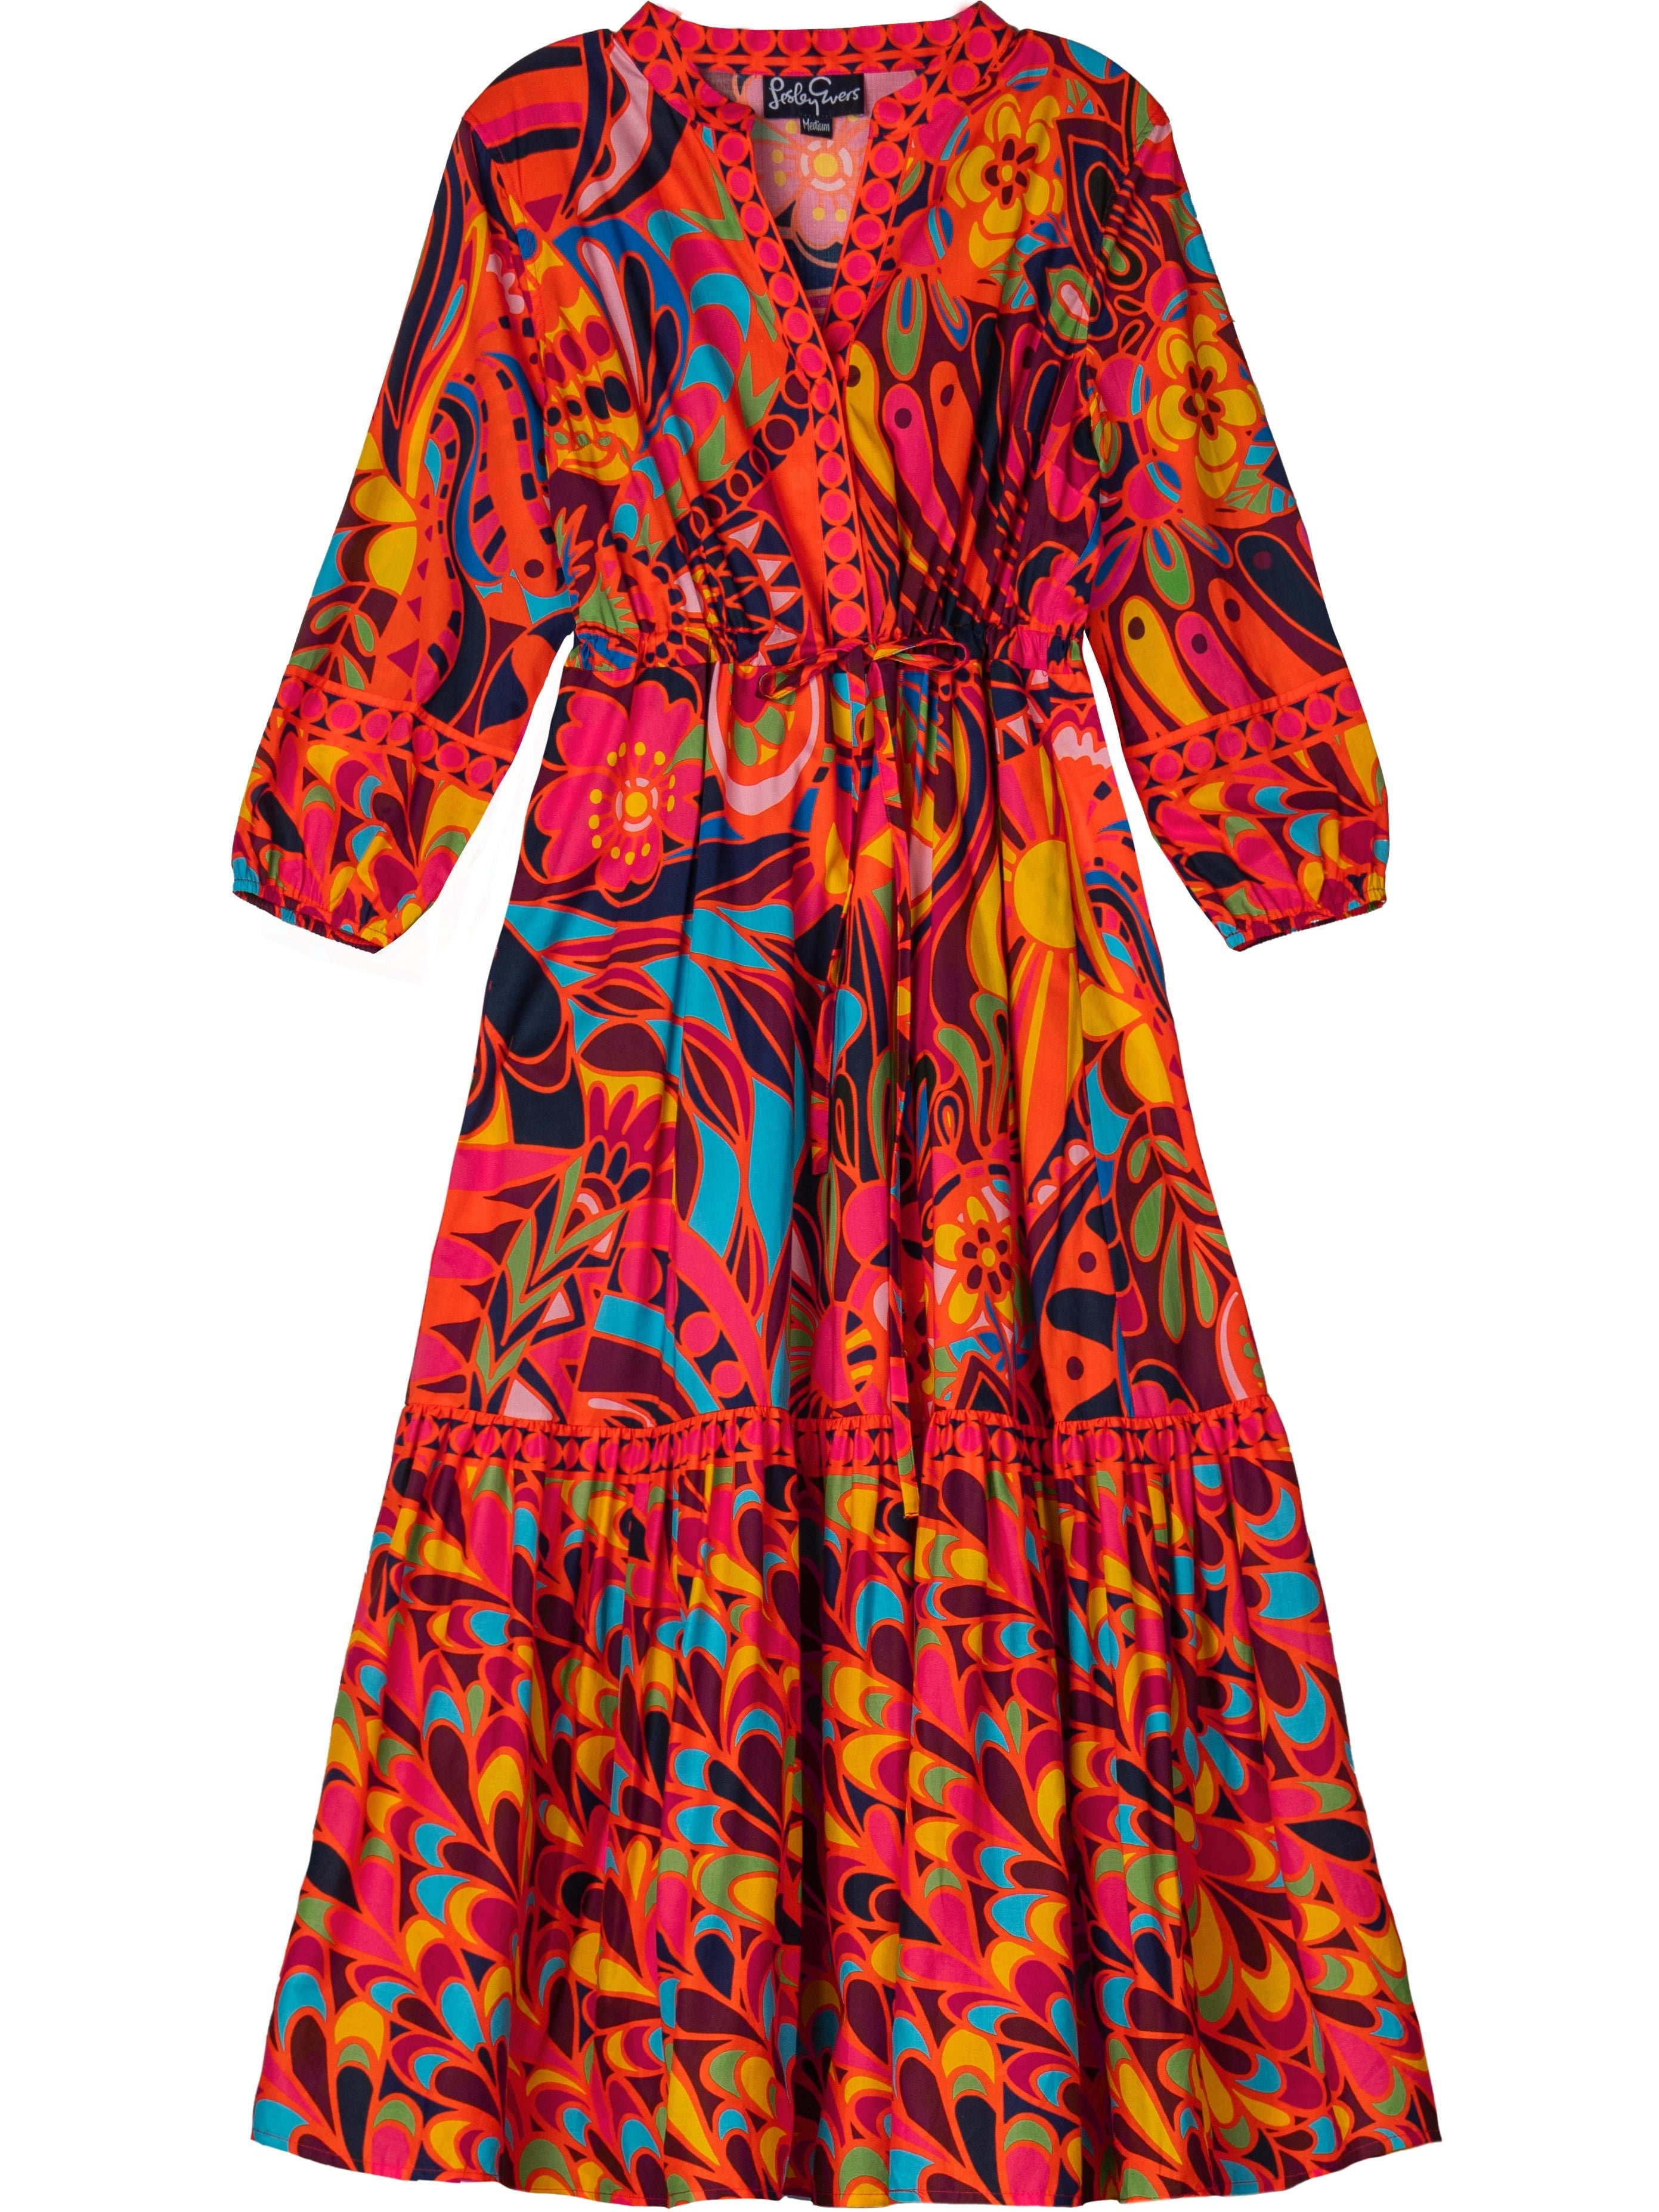 RENE dress Shakalaka Orange - Lesley Evers-Dress-Shop-Shop/All Products